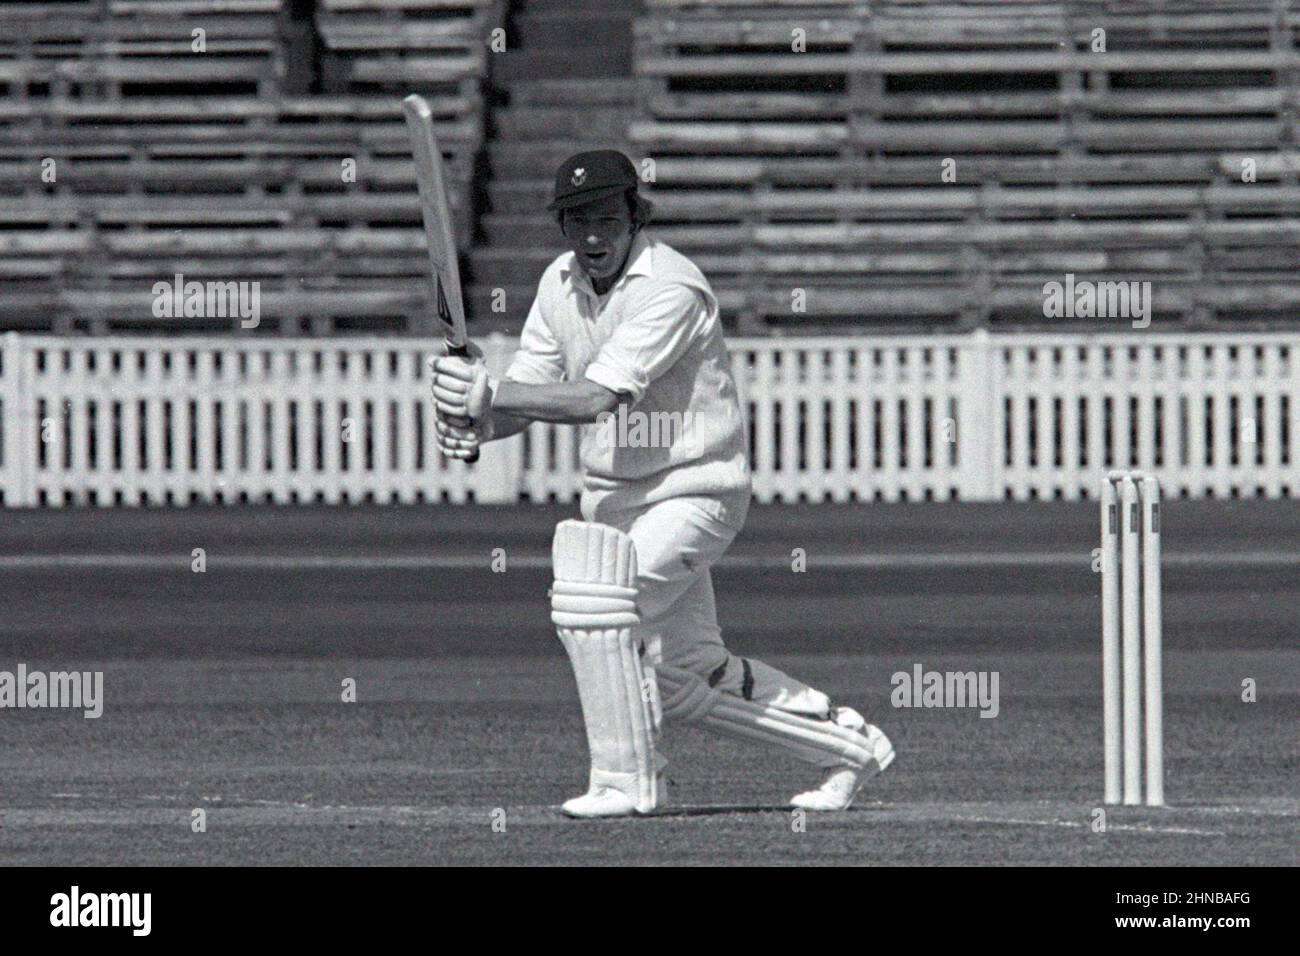 Alan Jones batting for Glamorgan, Warwickshire vs Glamorgan, Benson and Hedges Cup, Edgbaston Cricket Ground, Birmingham, England 23 April 1977.  Alan Jones was one of Wisden’s “Five Cricketers of the Year” in 1977. Stock Photo